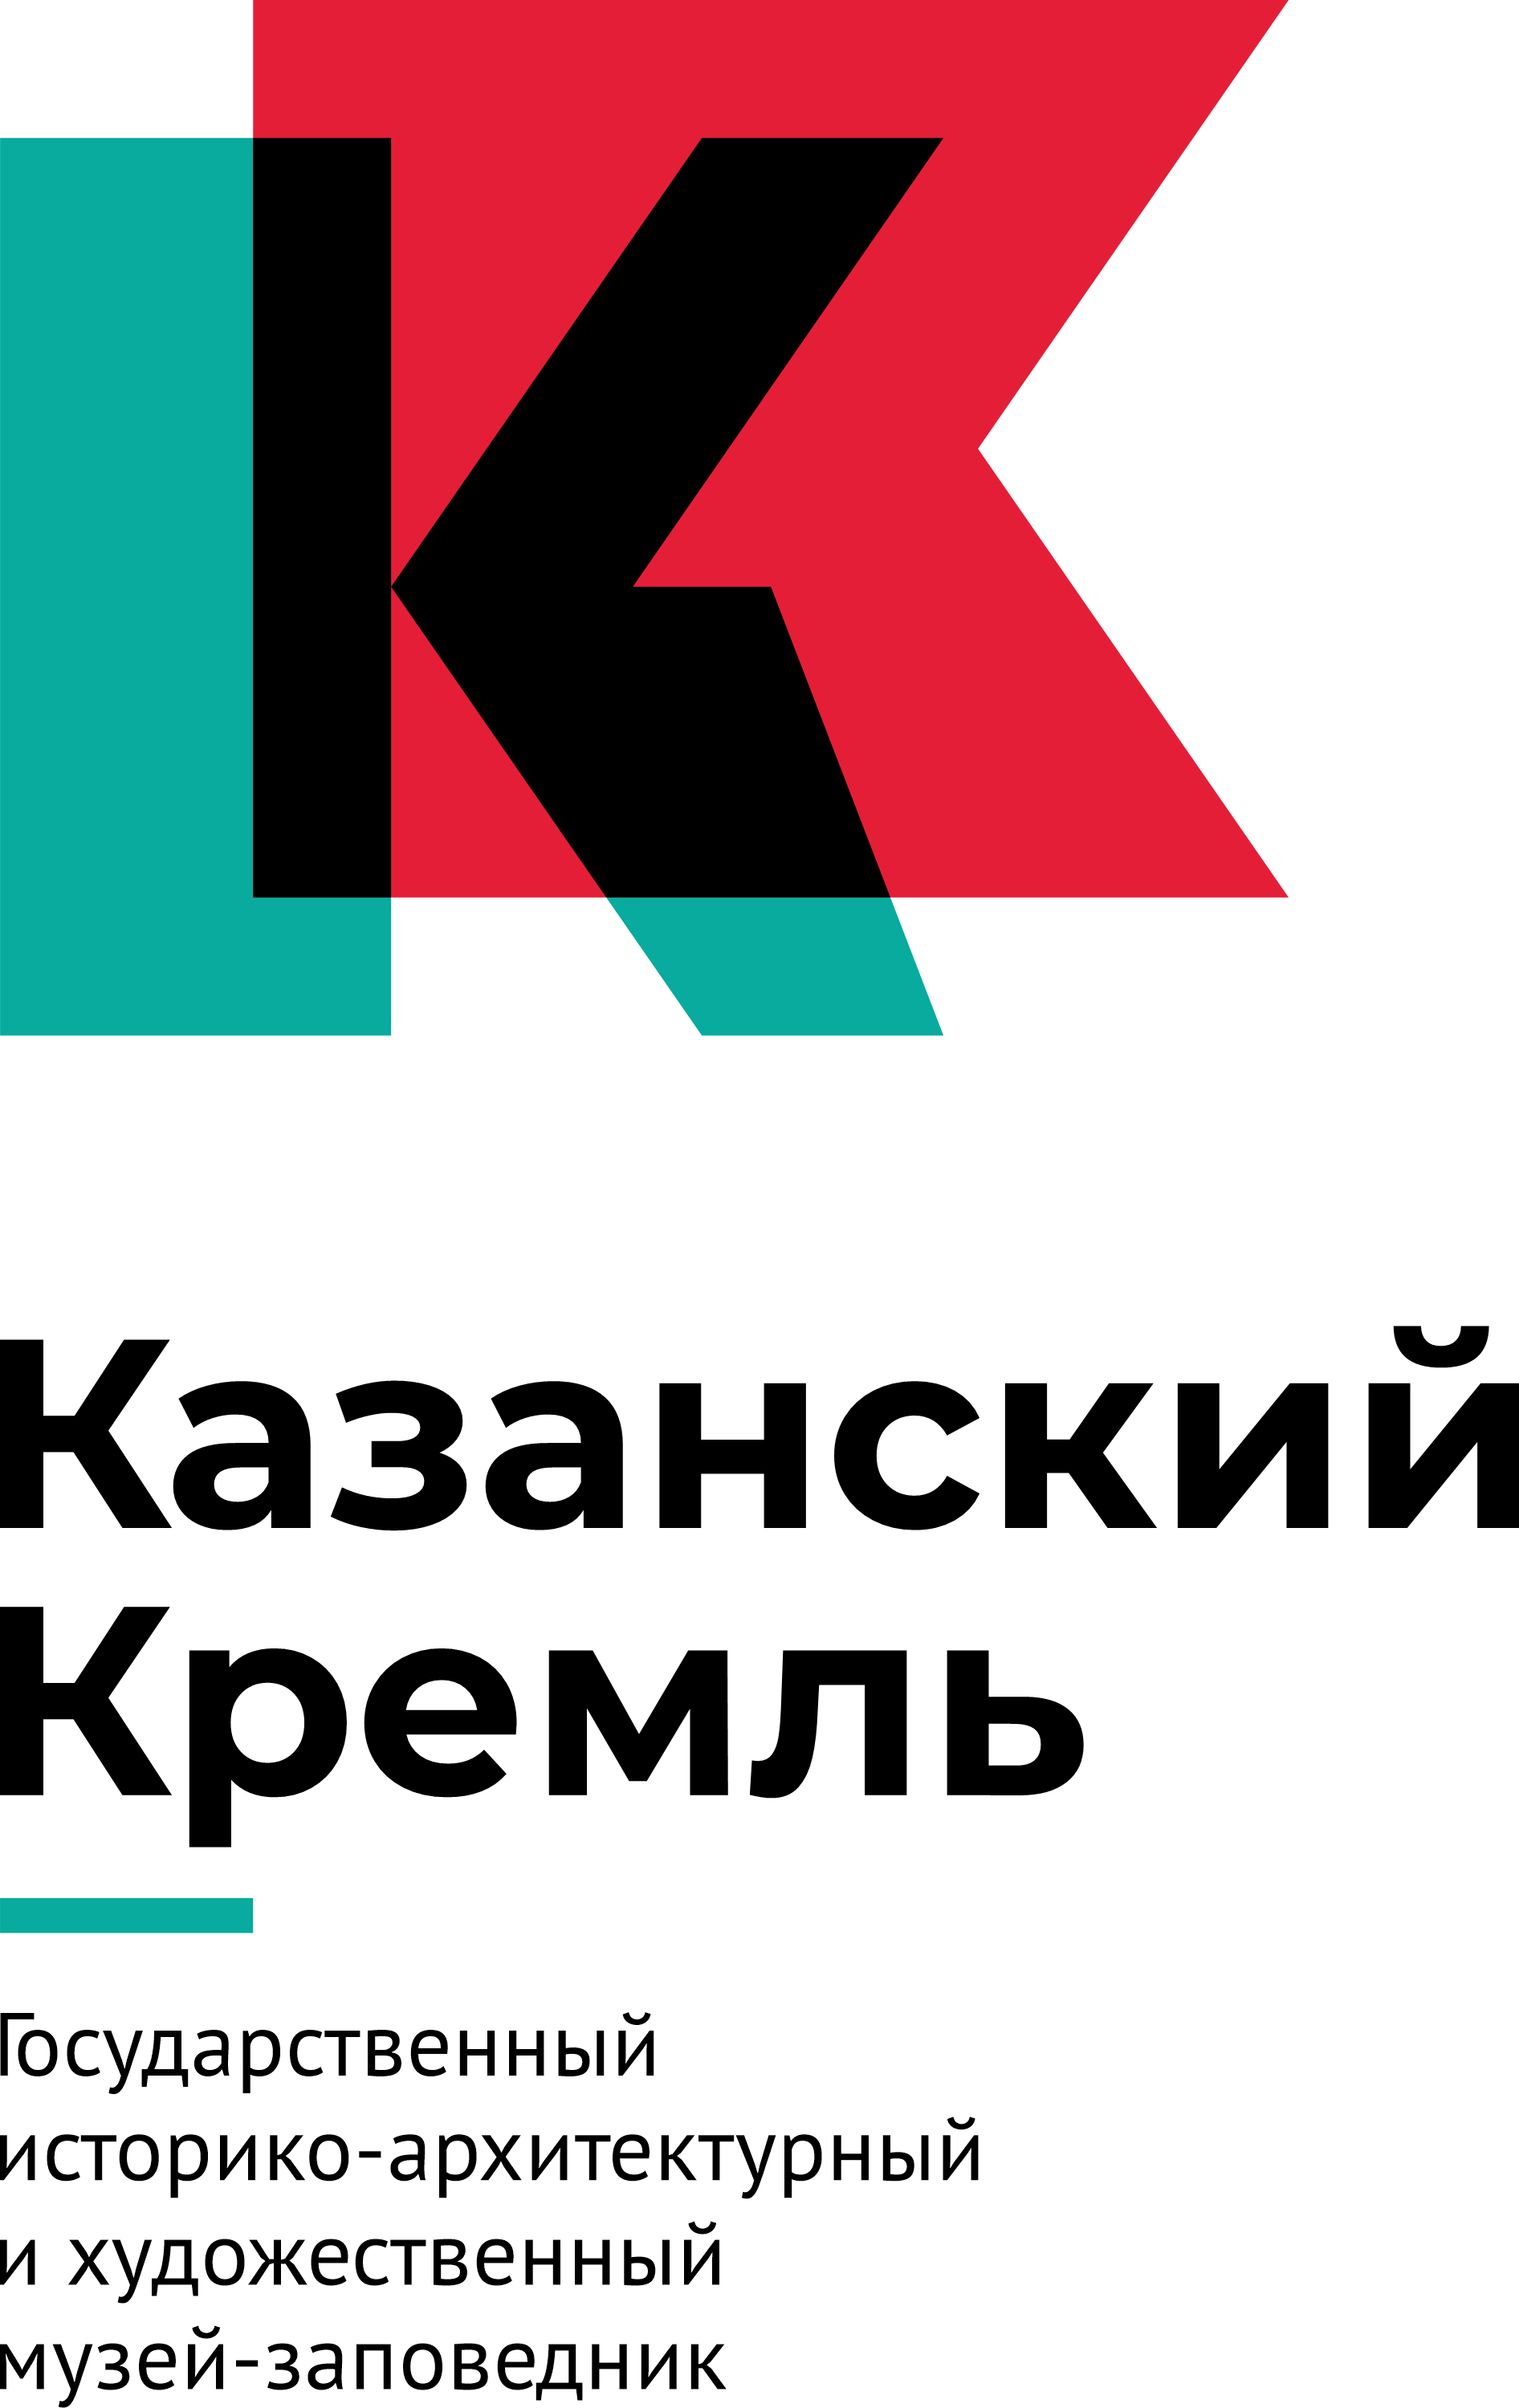 kazan logo.png - 148.69 KB